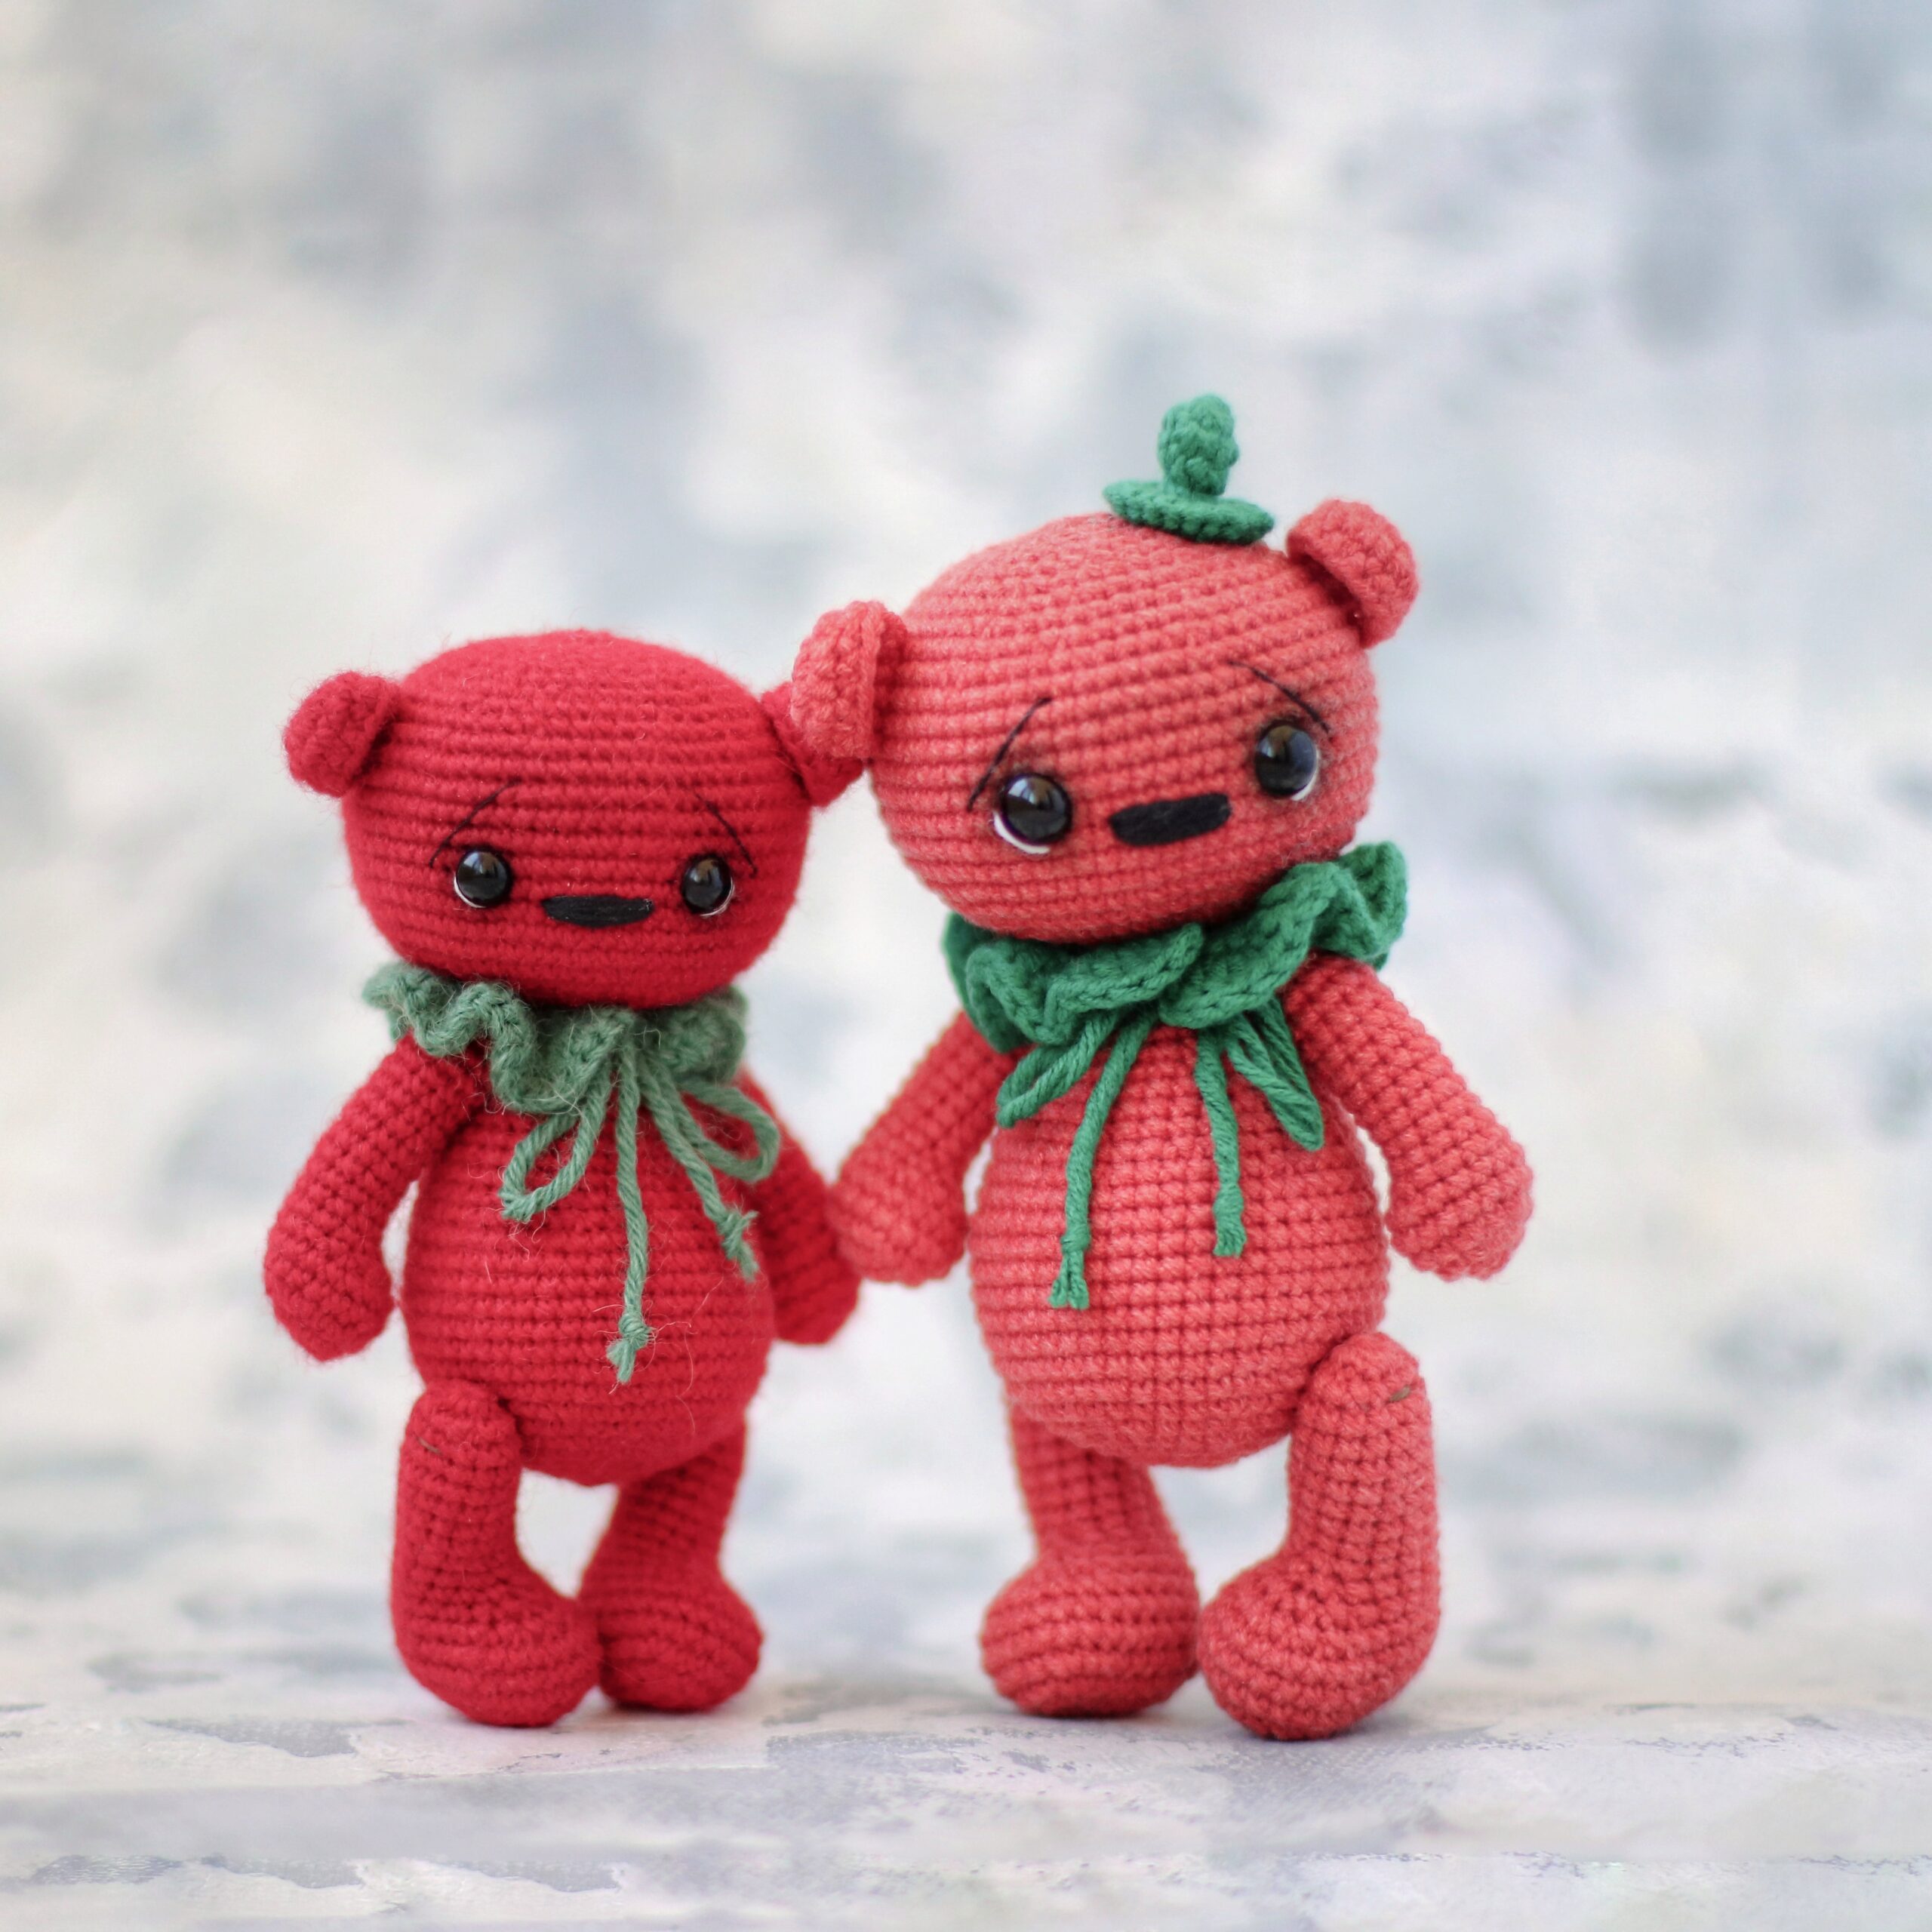 Crochet Jumpsuit (ONLY) for Usti the Teddy Bear (pattern